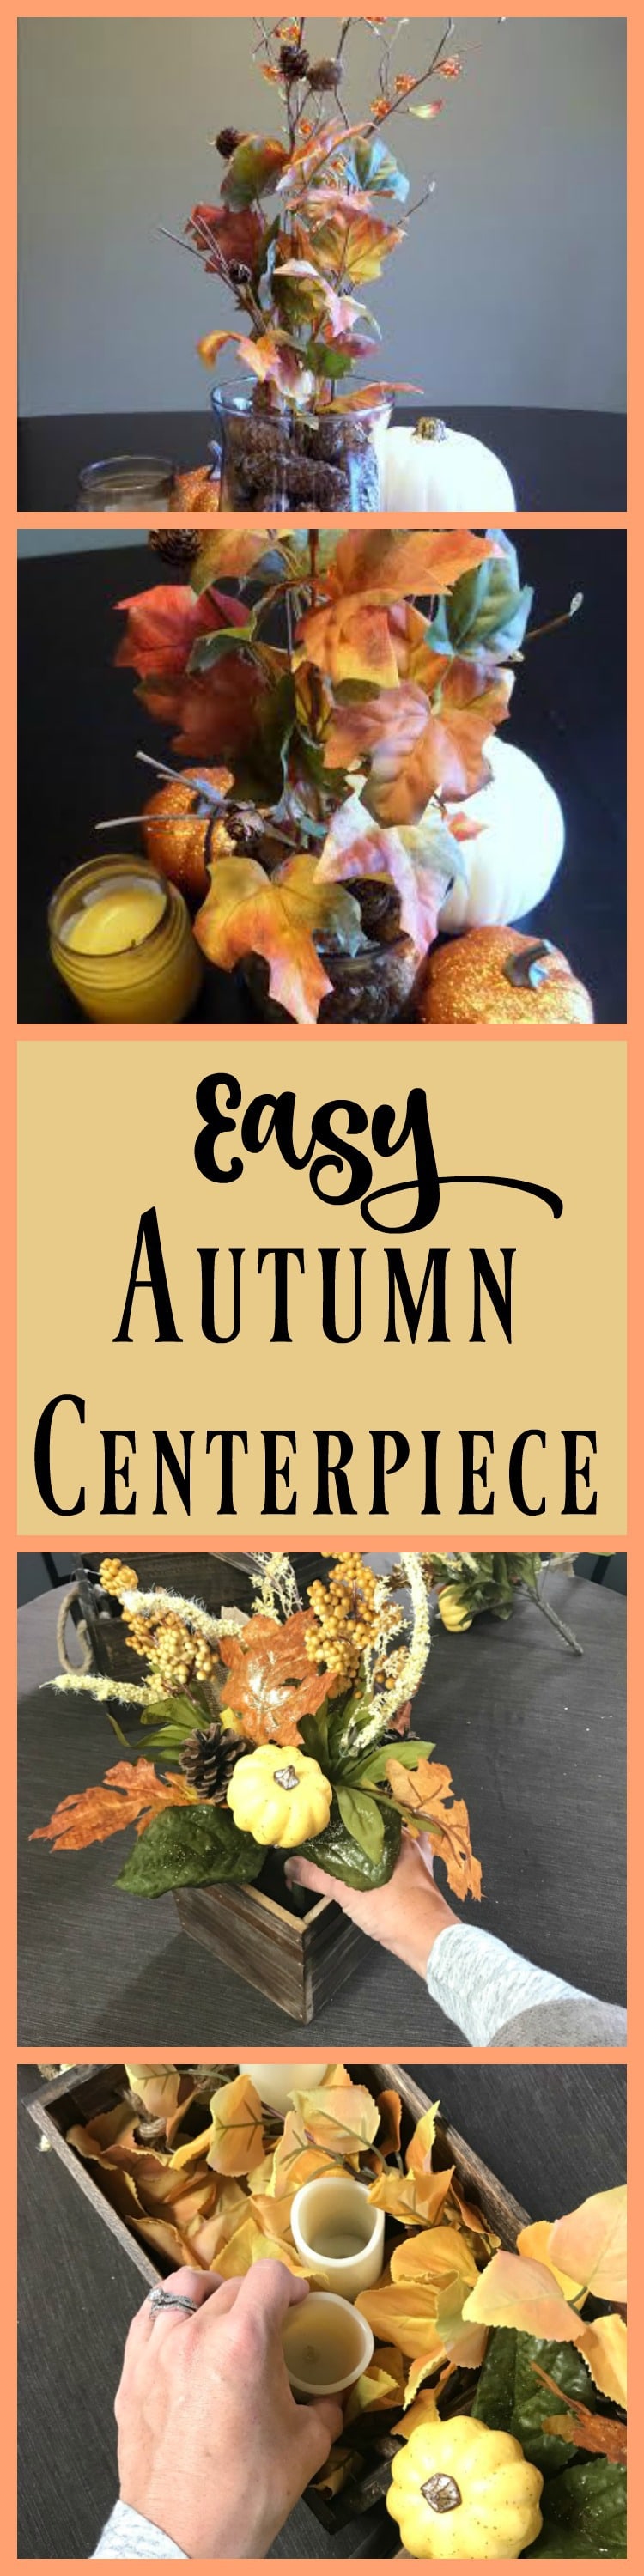 Easy Autumn Centerpiece Ideas